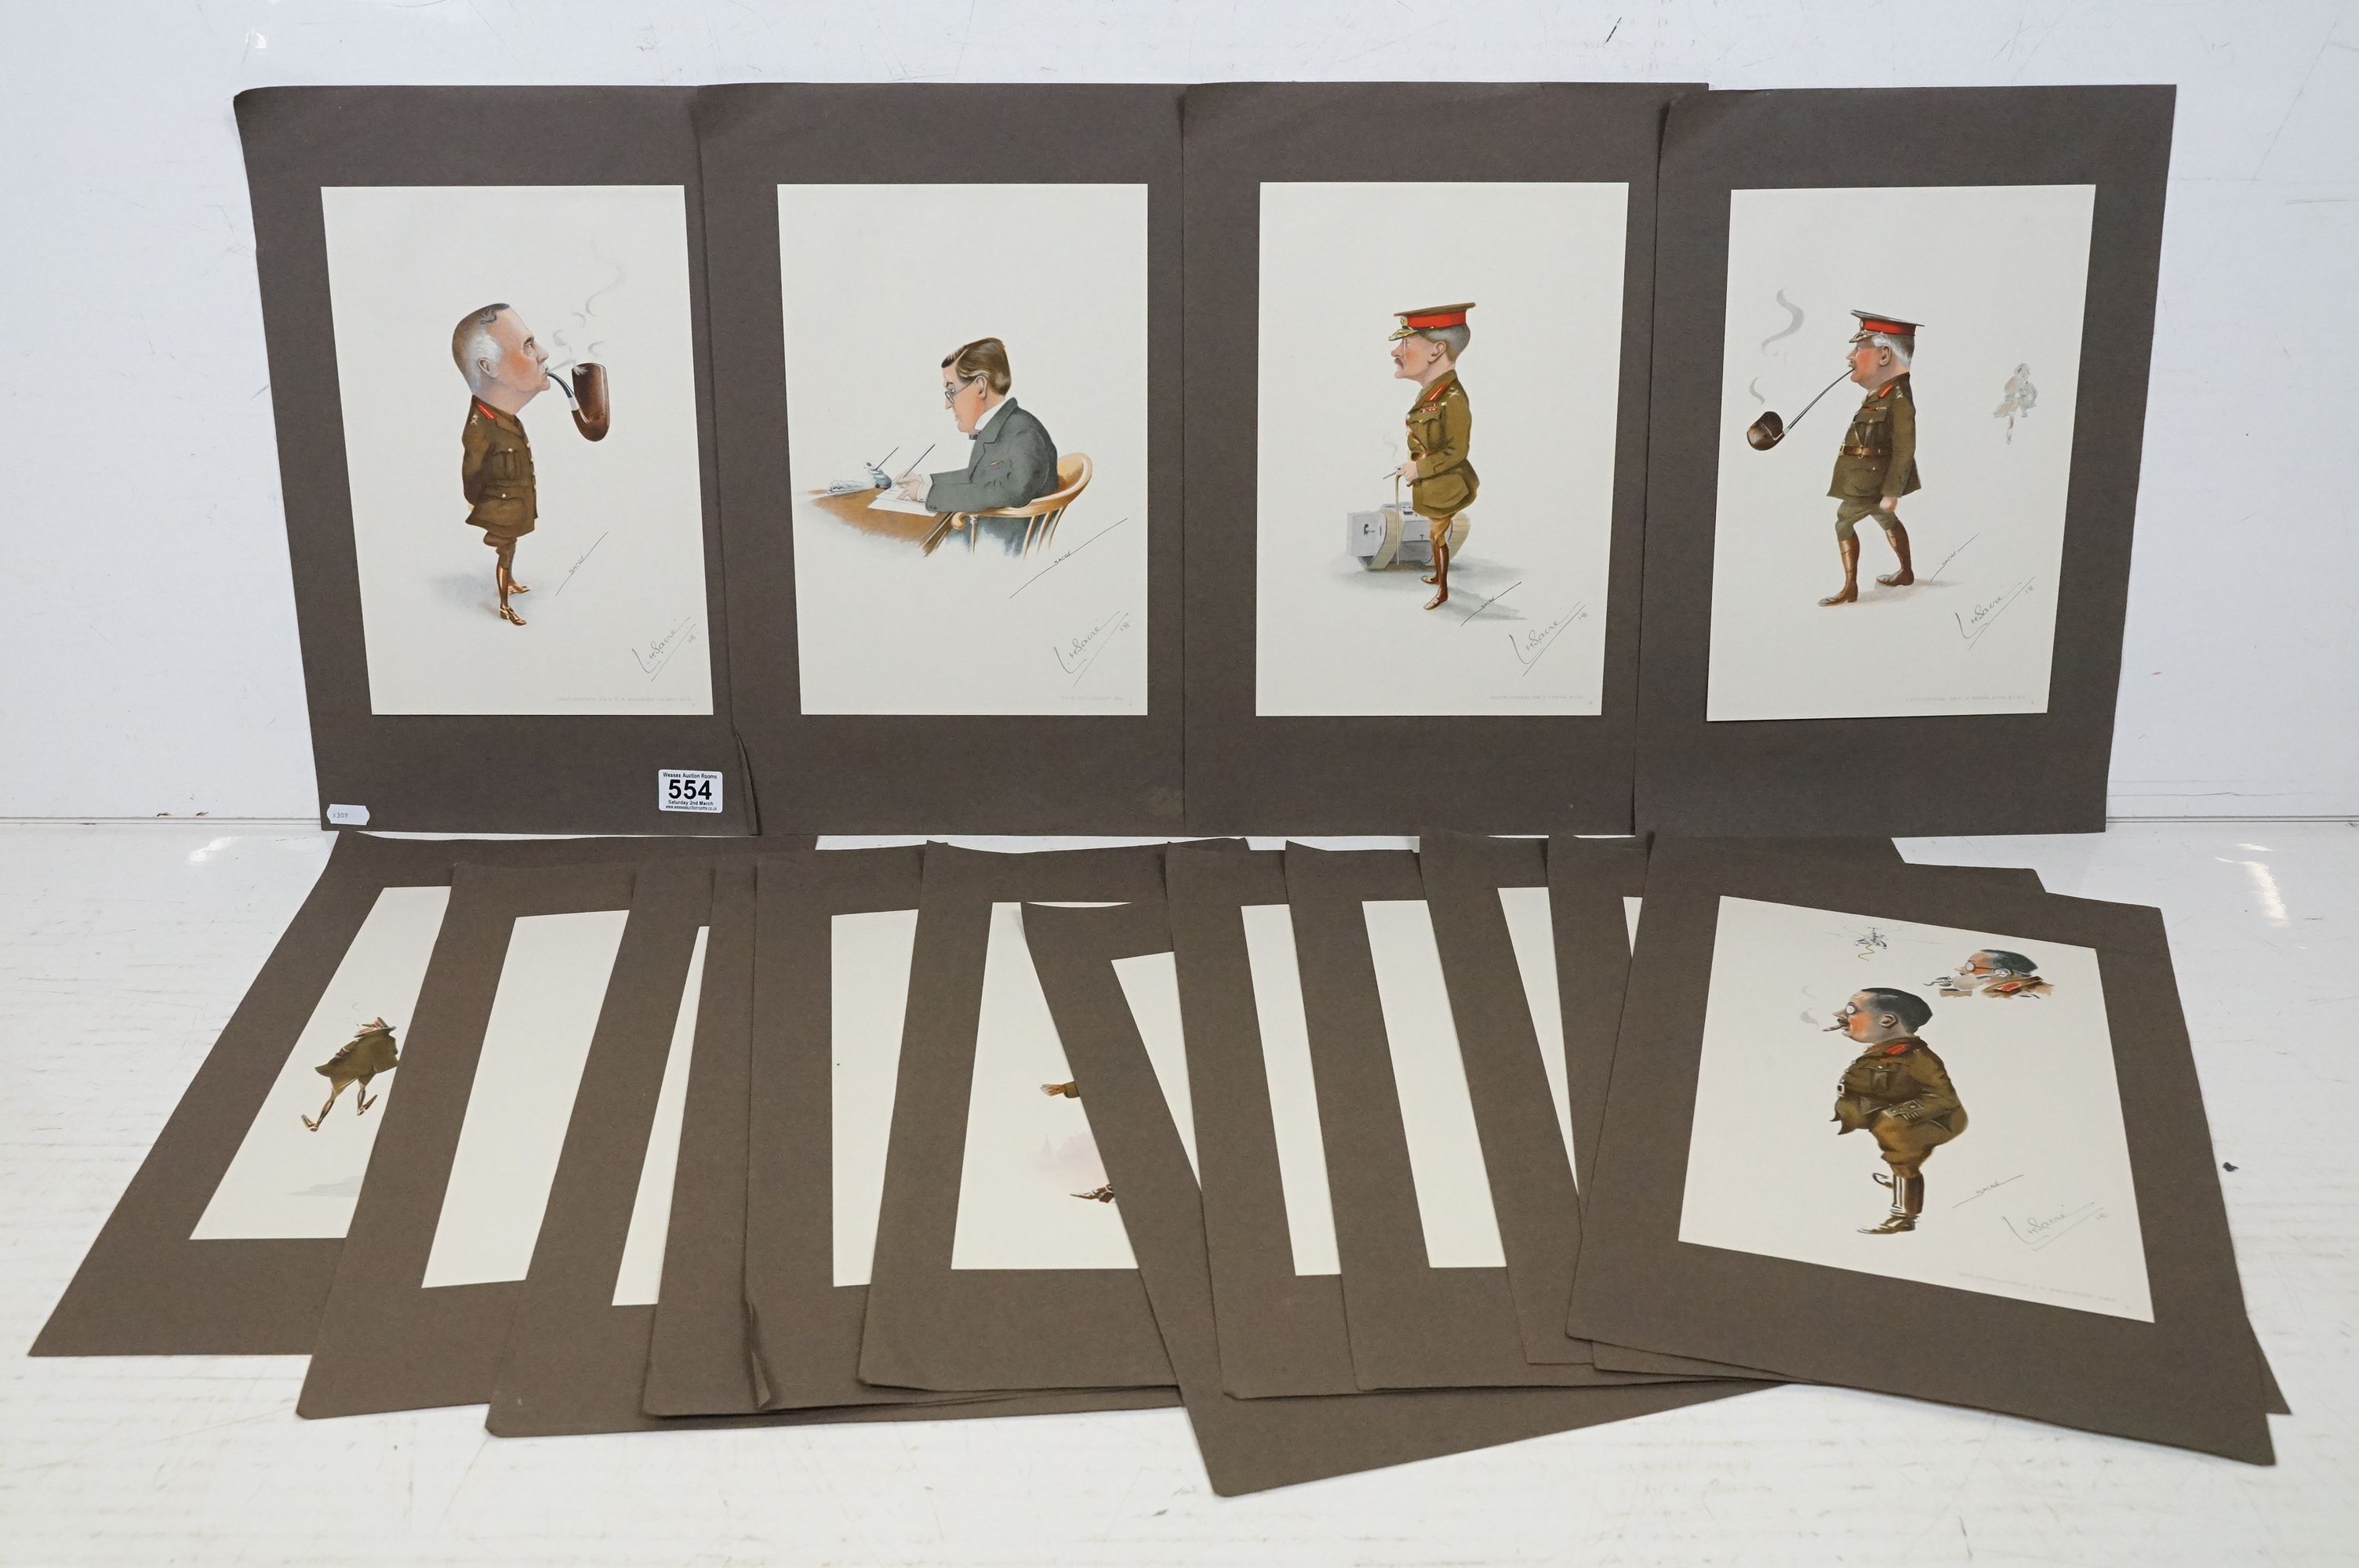 Lester Howard Sacré (1892 - 1974), Sidelights by Sacré, set of caricatures of British military